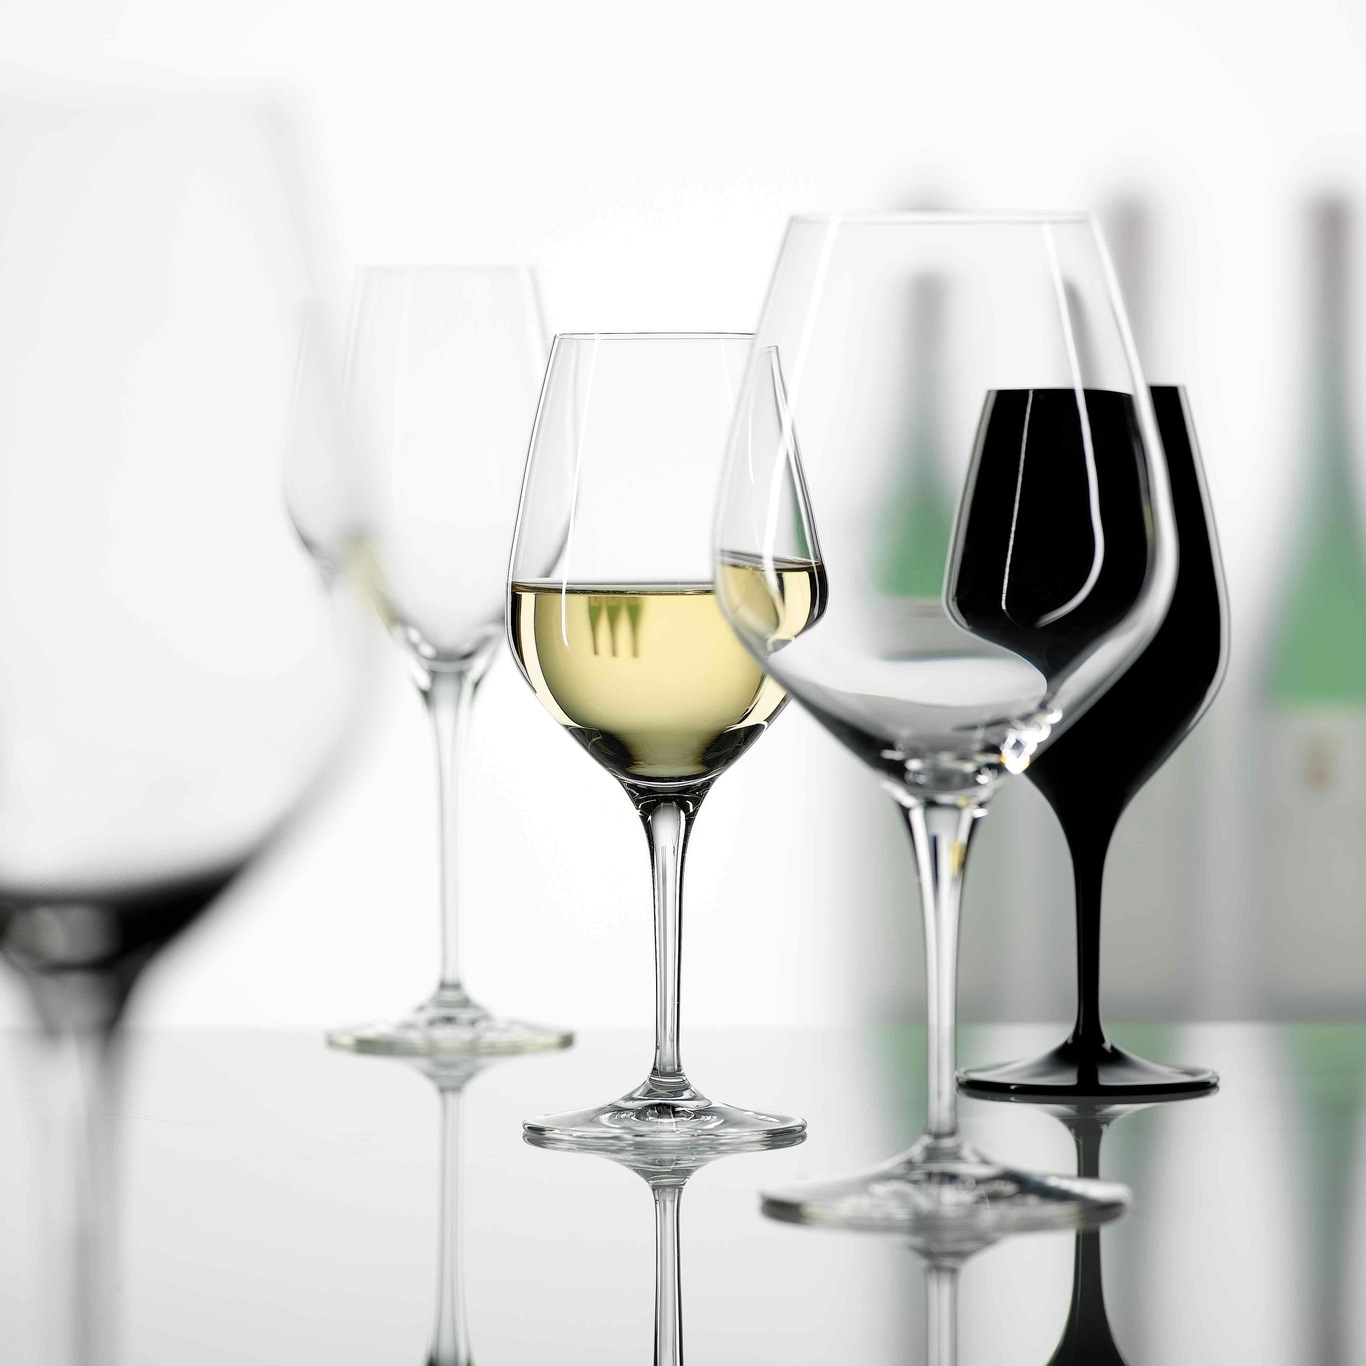 Spiegelau Red Wine Glasses (Set of 4)